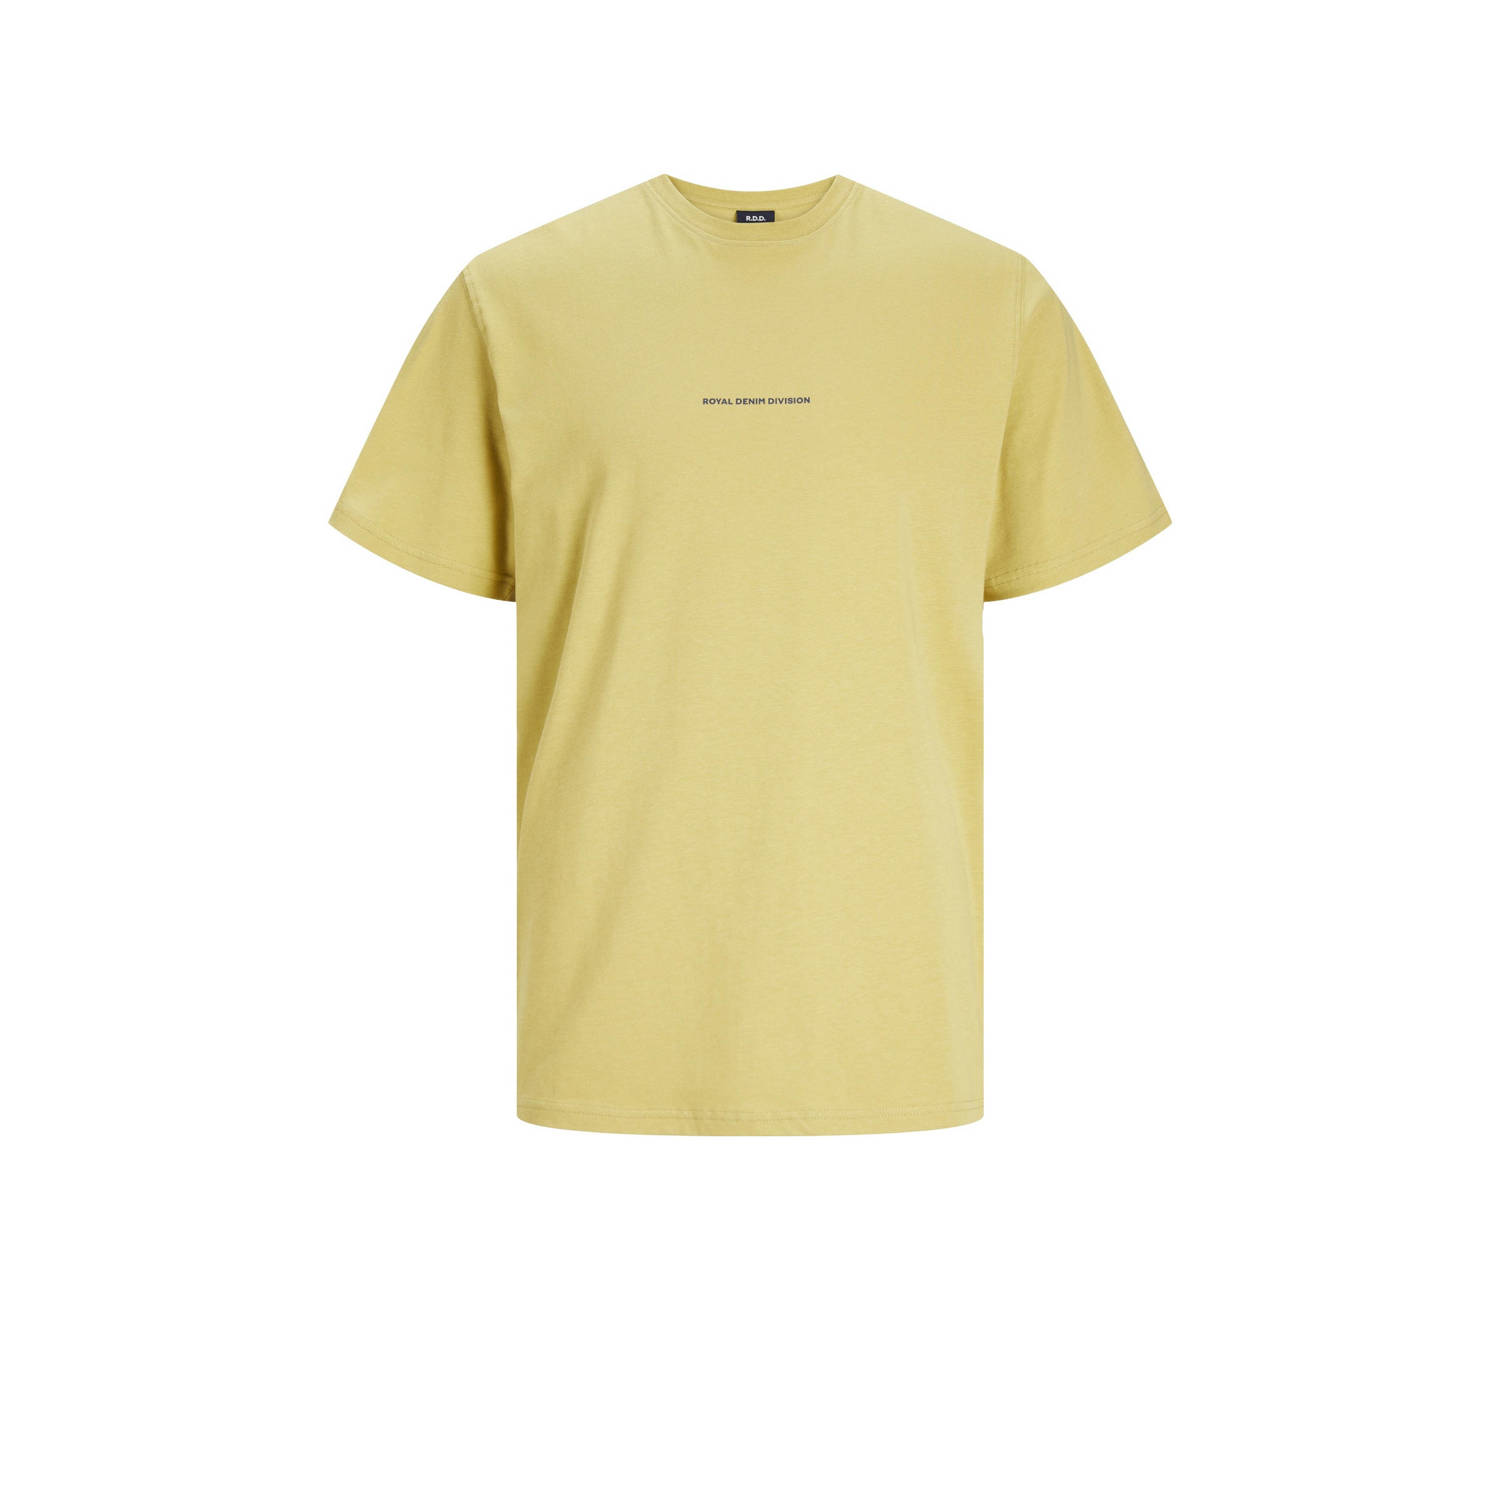 R.D.D. ROYAL DENIM DIVISION oversized T-shirt met printopdruk geel